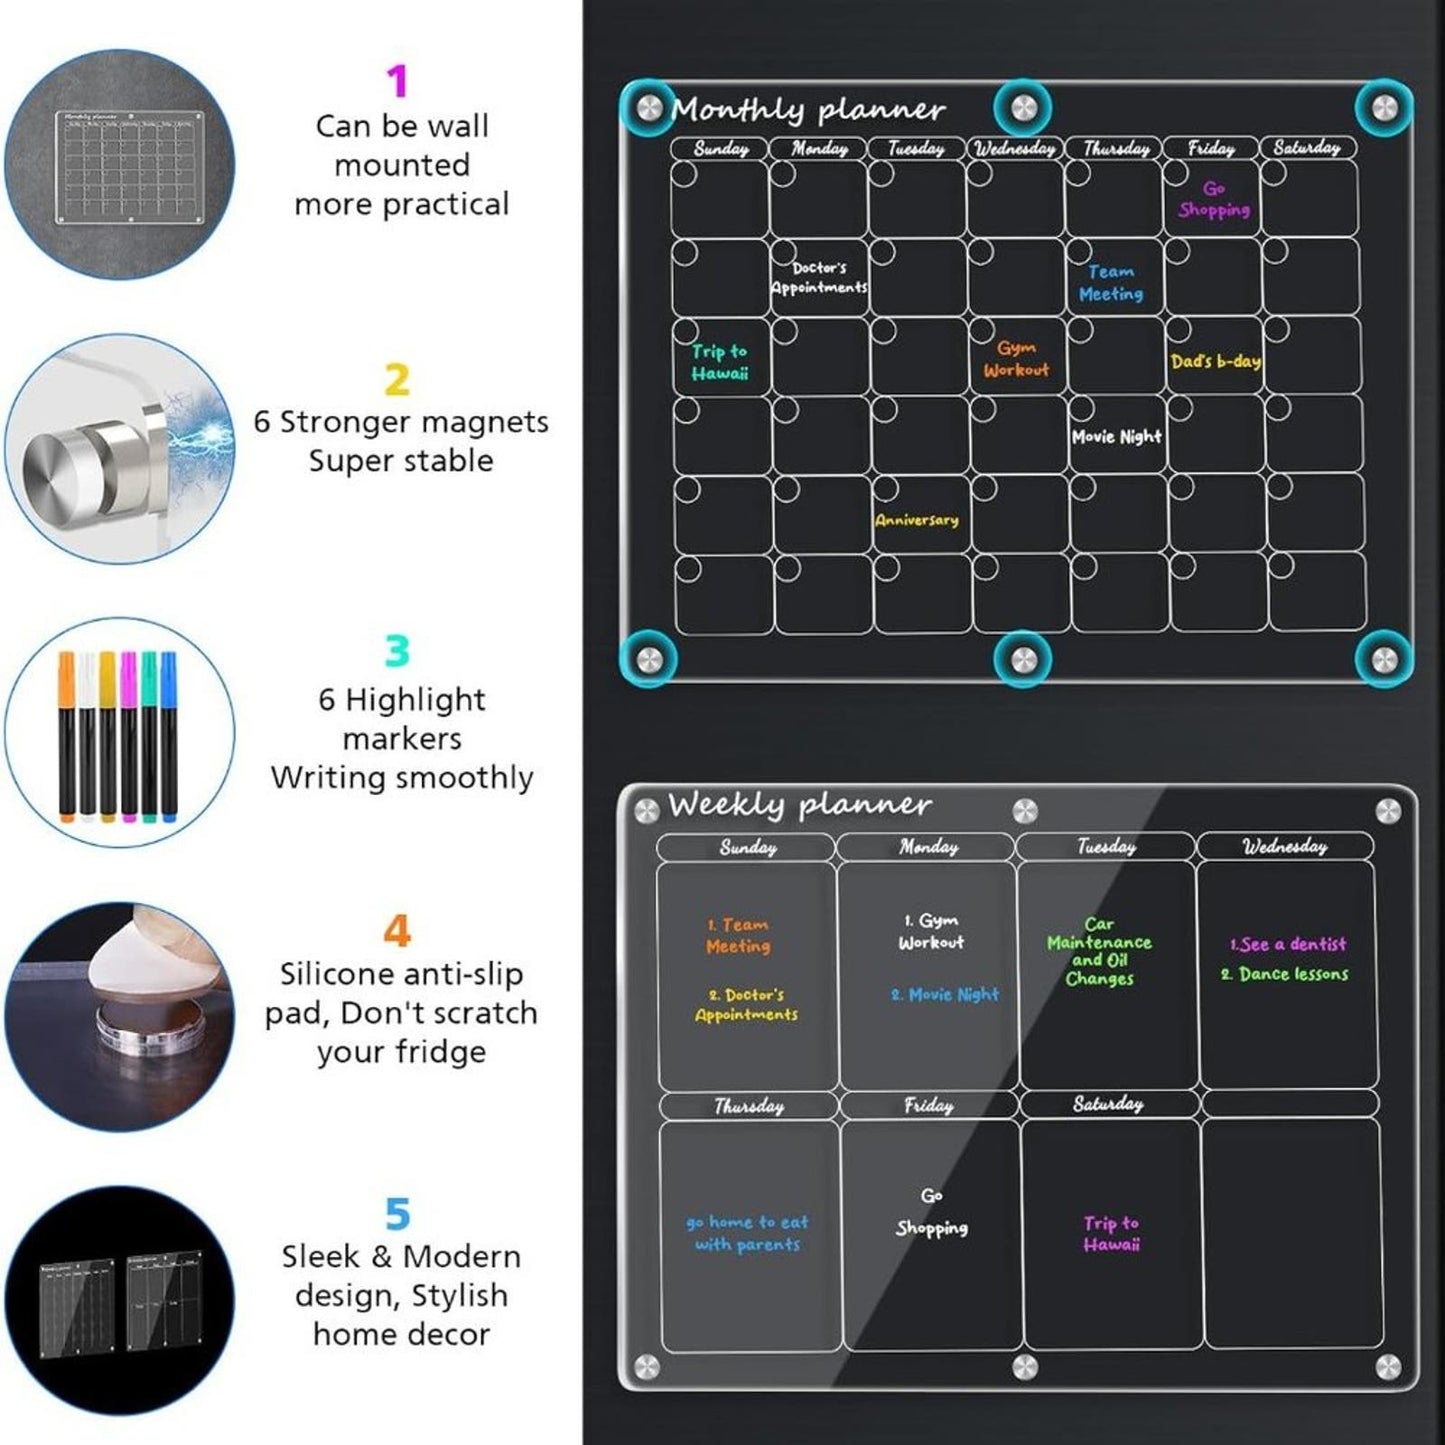 CSIHOP Acrylic Calendar for Fridge H2.0, Clear Magnetic Calendar for Fridge